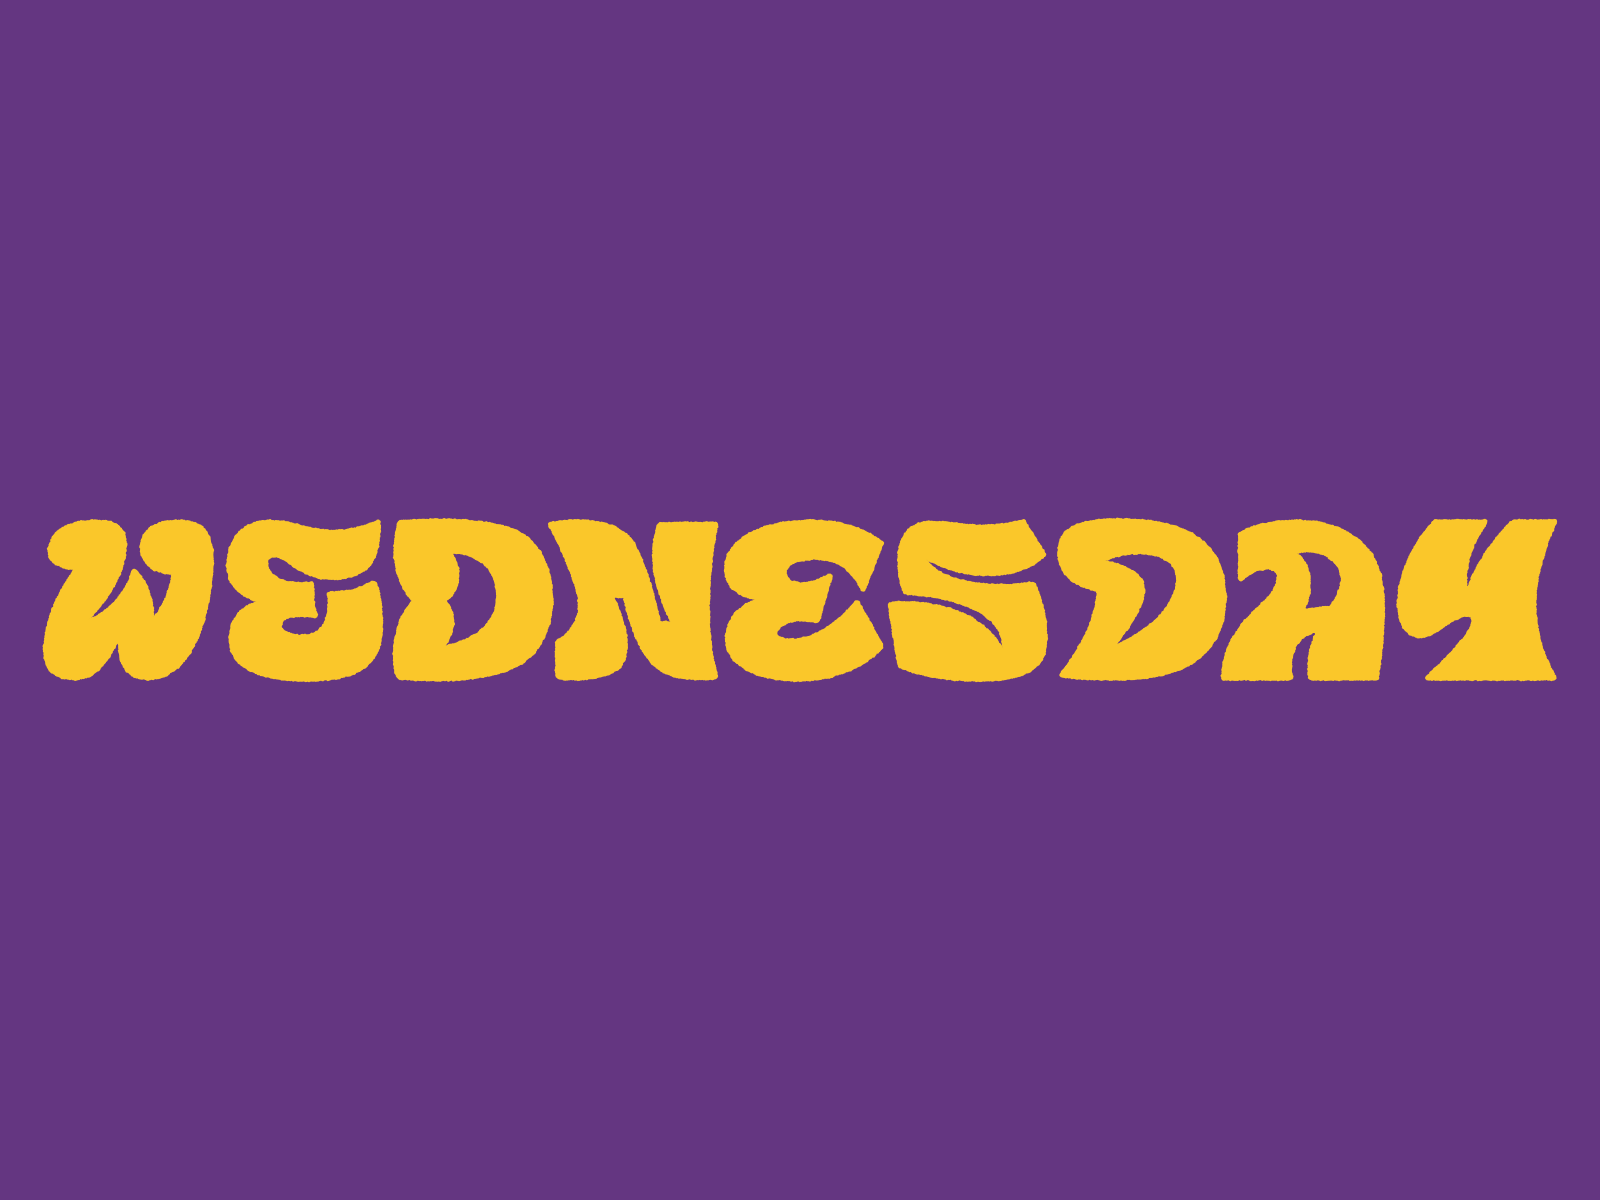 ✦ Lettering week — Wednesday ✦ art design drawing illustration lettering wednesday week